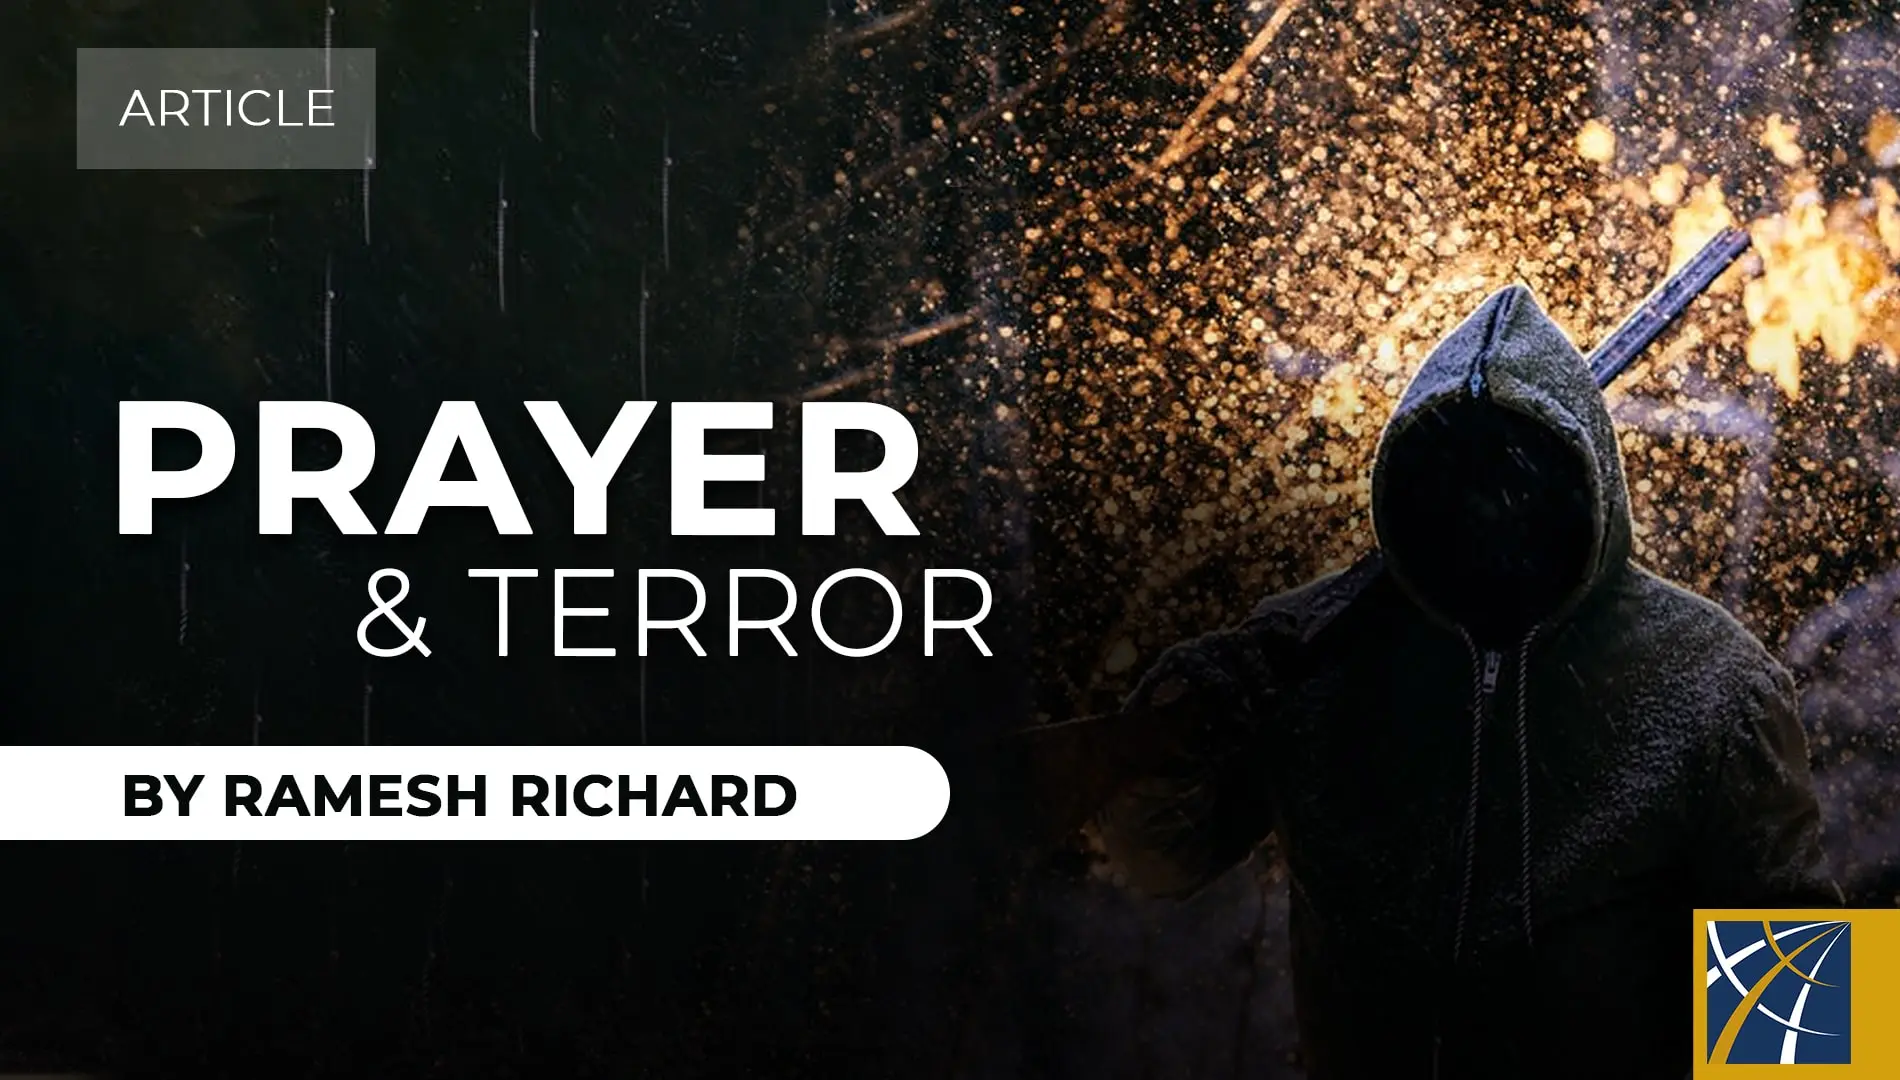 Prayer and terror image